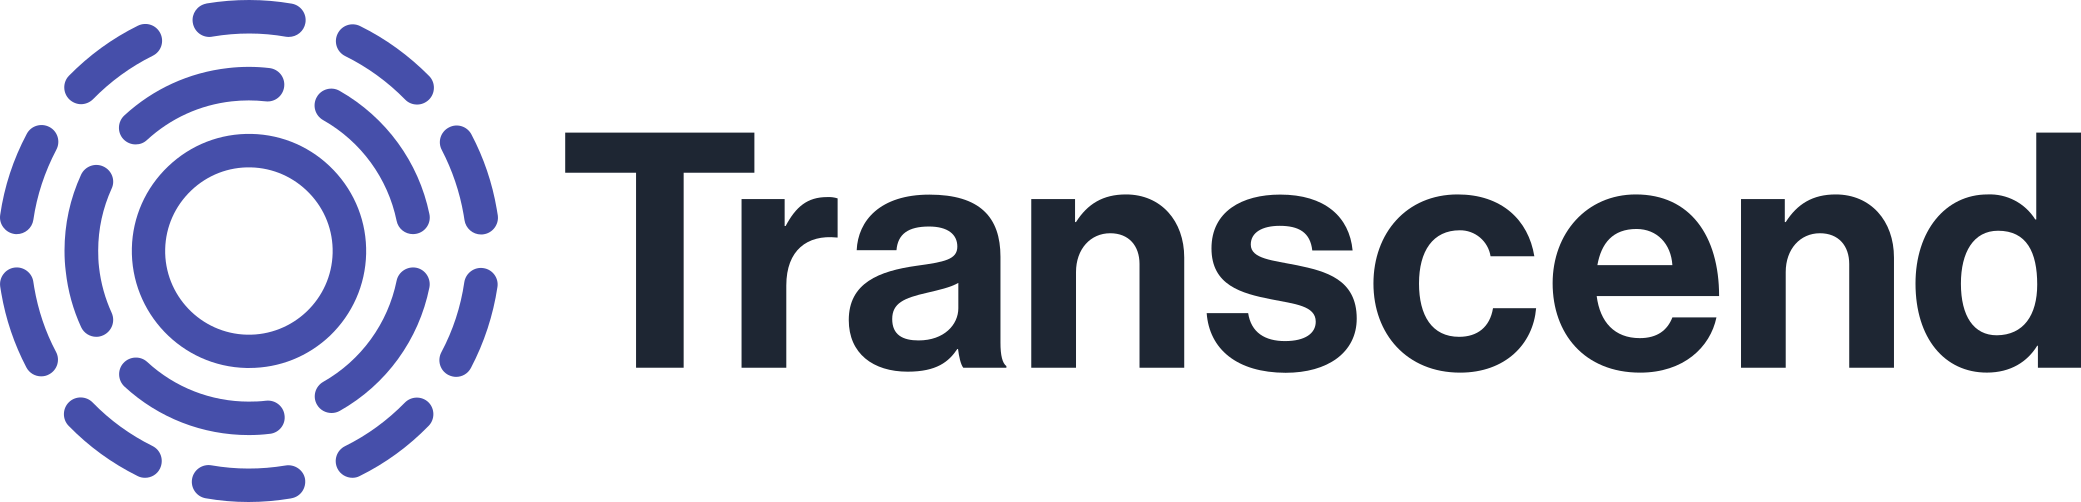 Transcend - Logo - Palladium Branding (1).png